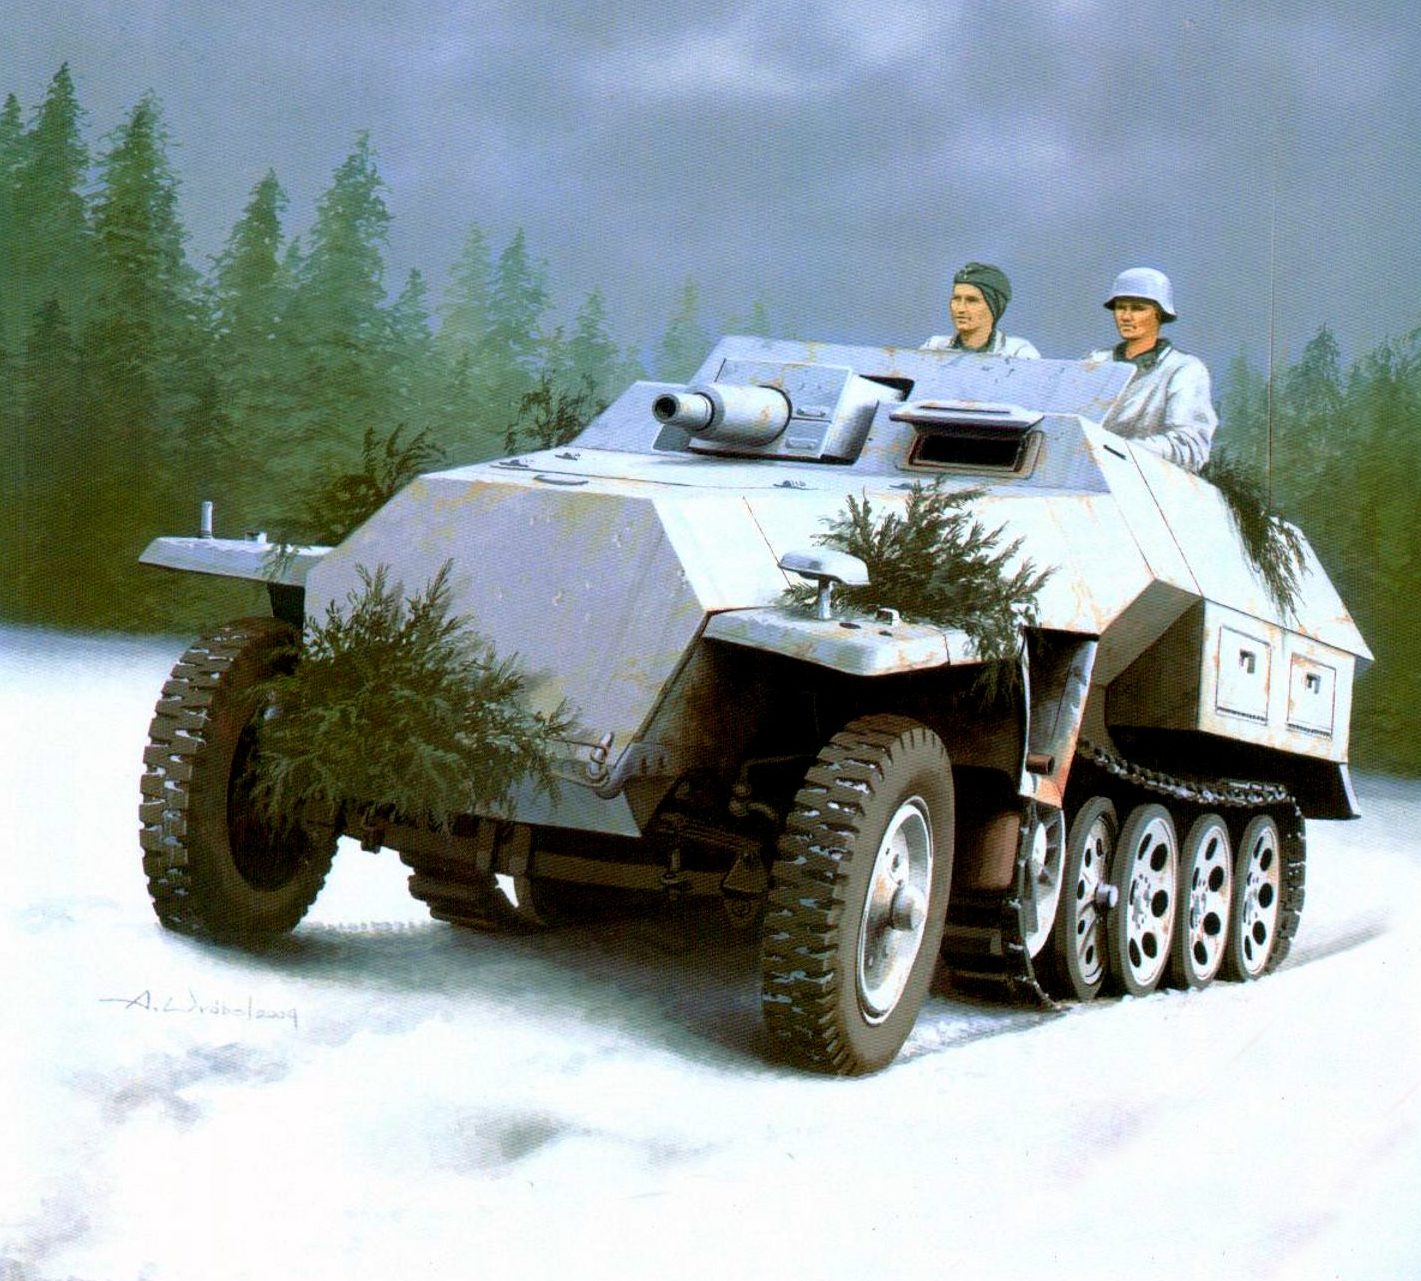 Wróbel Arkadiusz. Полугусеничный бронетранспортер Sd.Kfz. 251 Ausf. D.